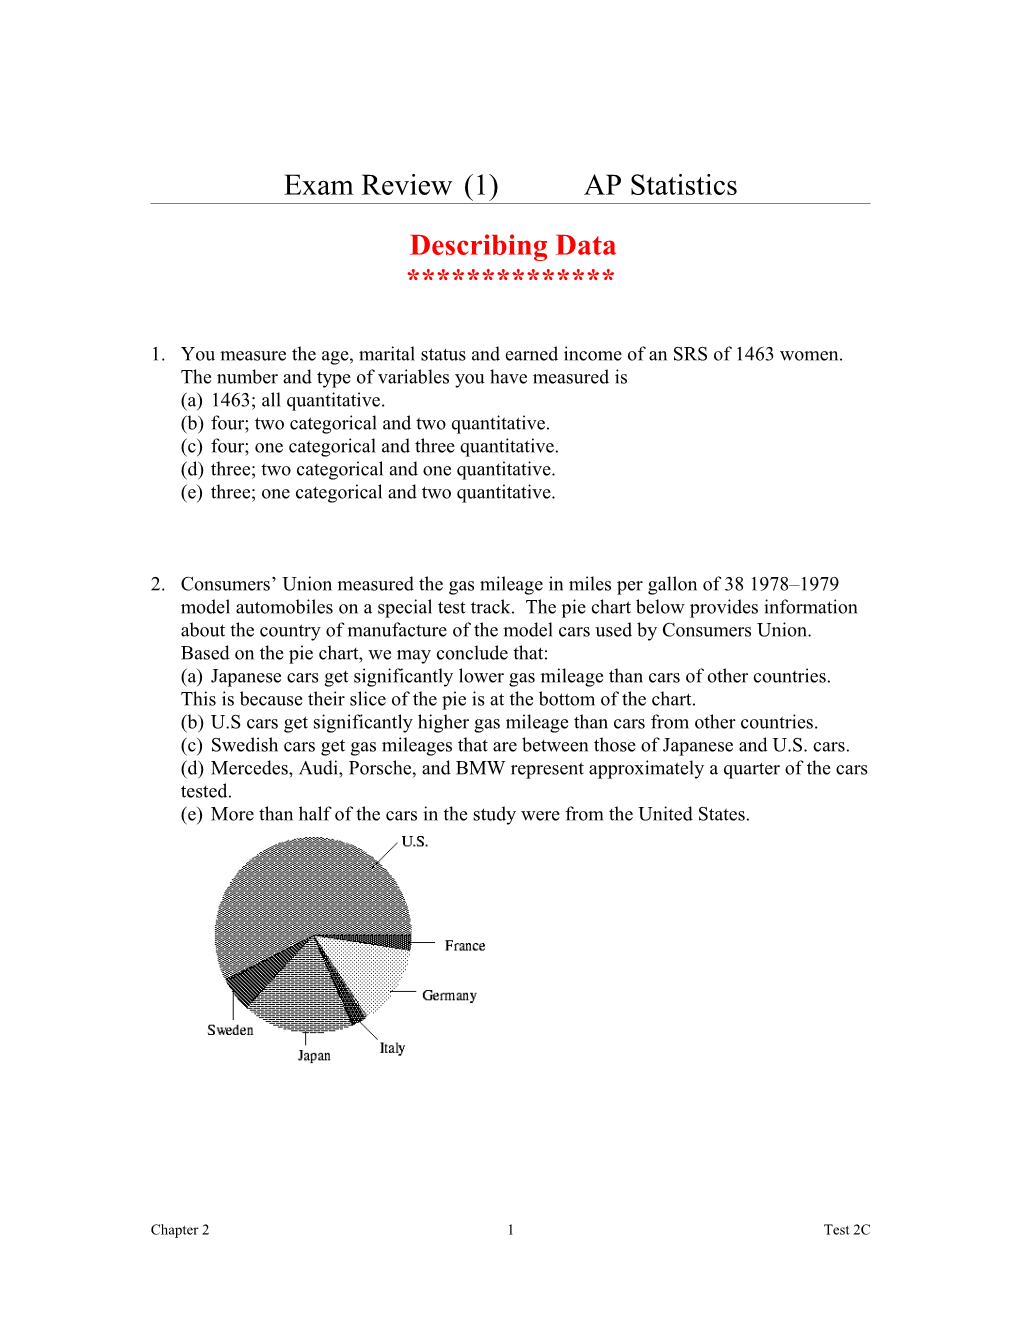 Exam Review(1)AP Statistics